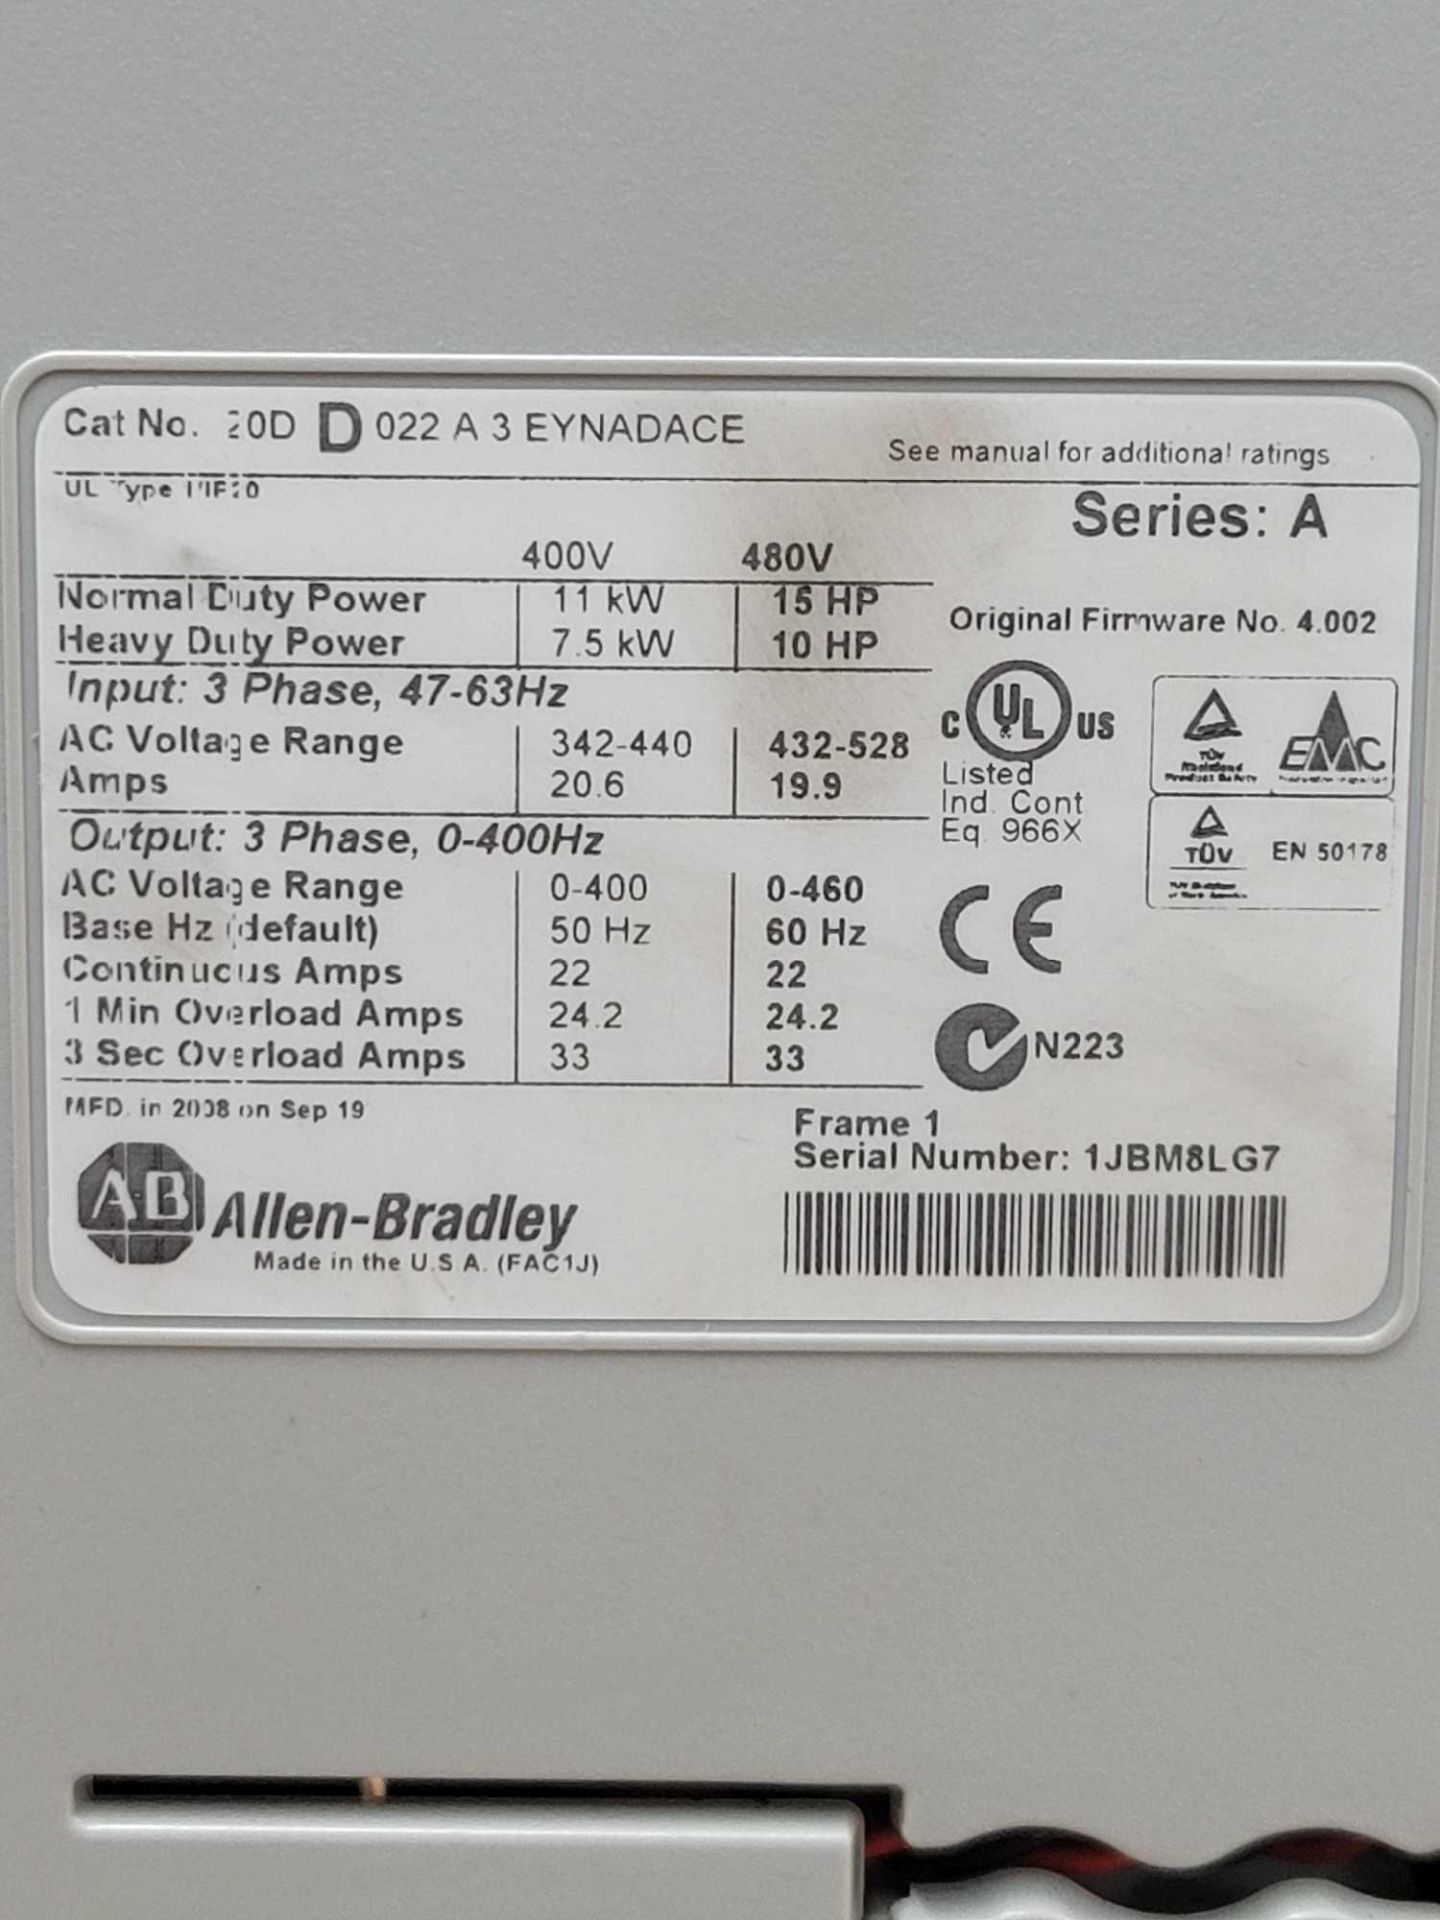 ALLEN BRADLEY 20DD022A3EYNADACE / Series A Powerflex 700S AC Drive  /  Lot Weight: 16.4 lbs - Image 7 of 7